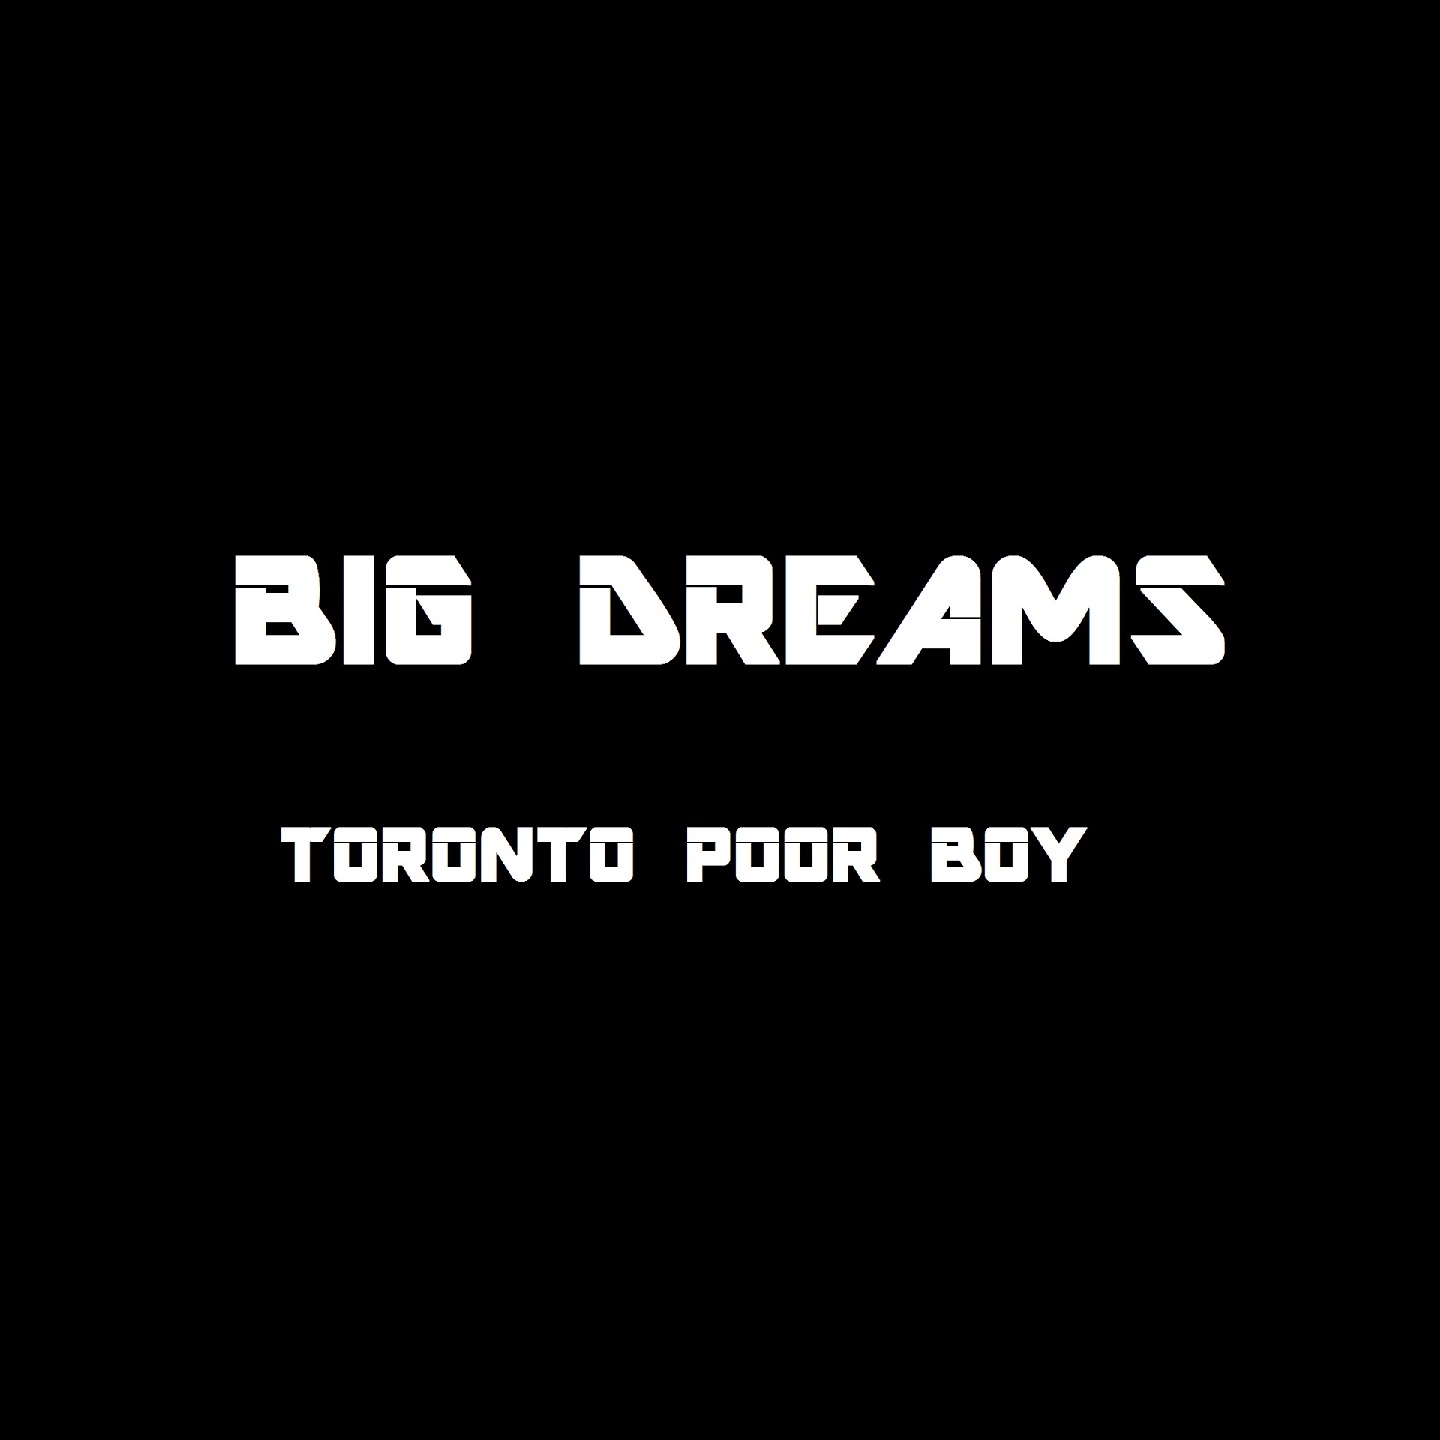 Canadian Hip Hop Artist Toronto Poor Boy Releases Inspiring New Single “Big Dreams”